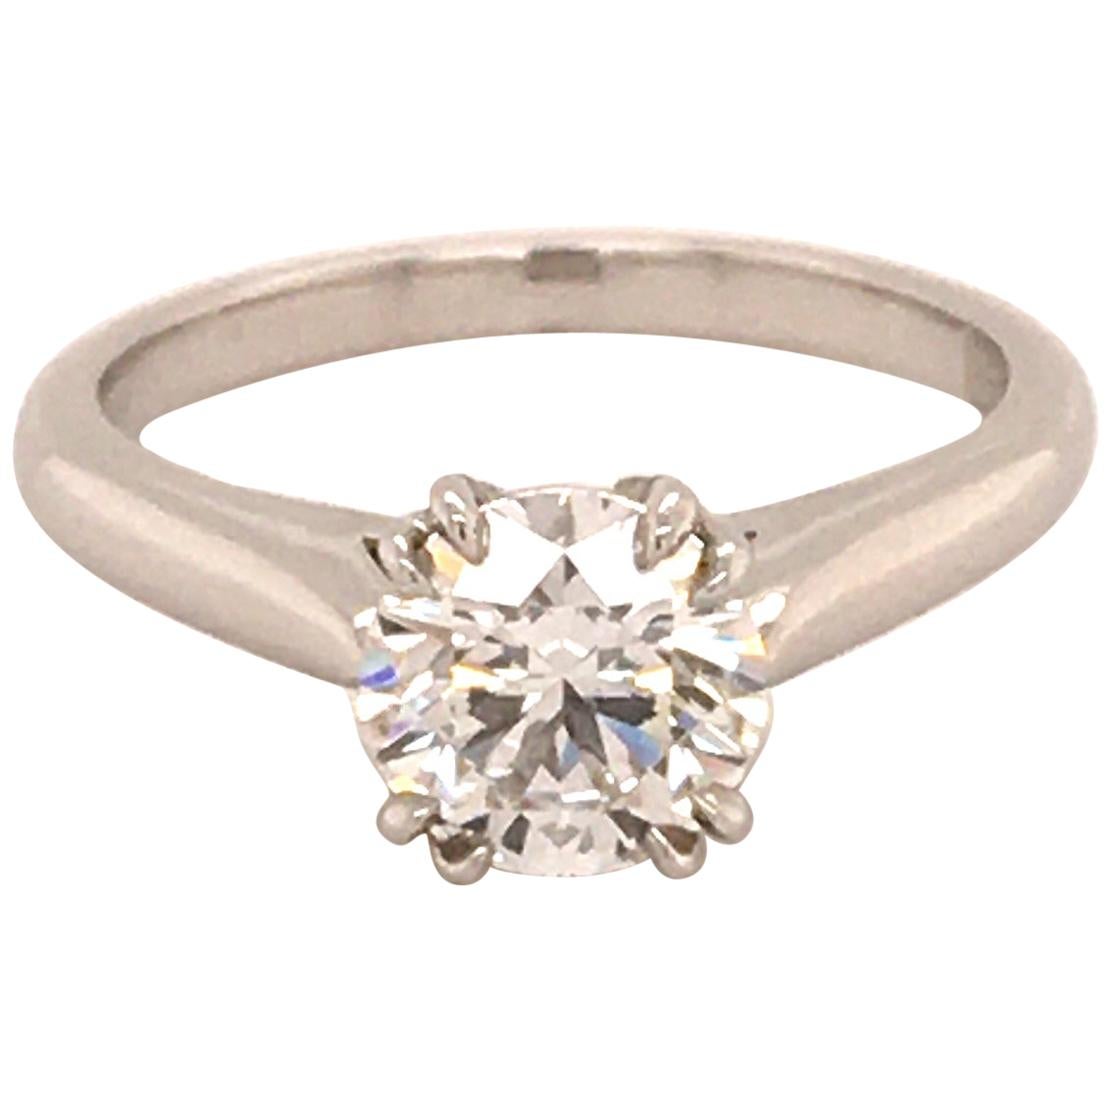 Harry Winston 1.11 Carat GIA Certified F-VS1 Diamond Engagement Ring in Platinum